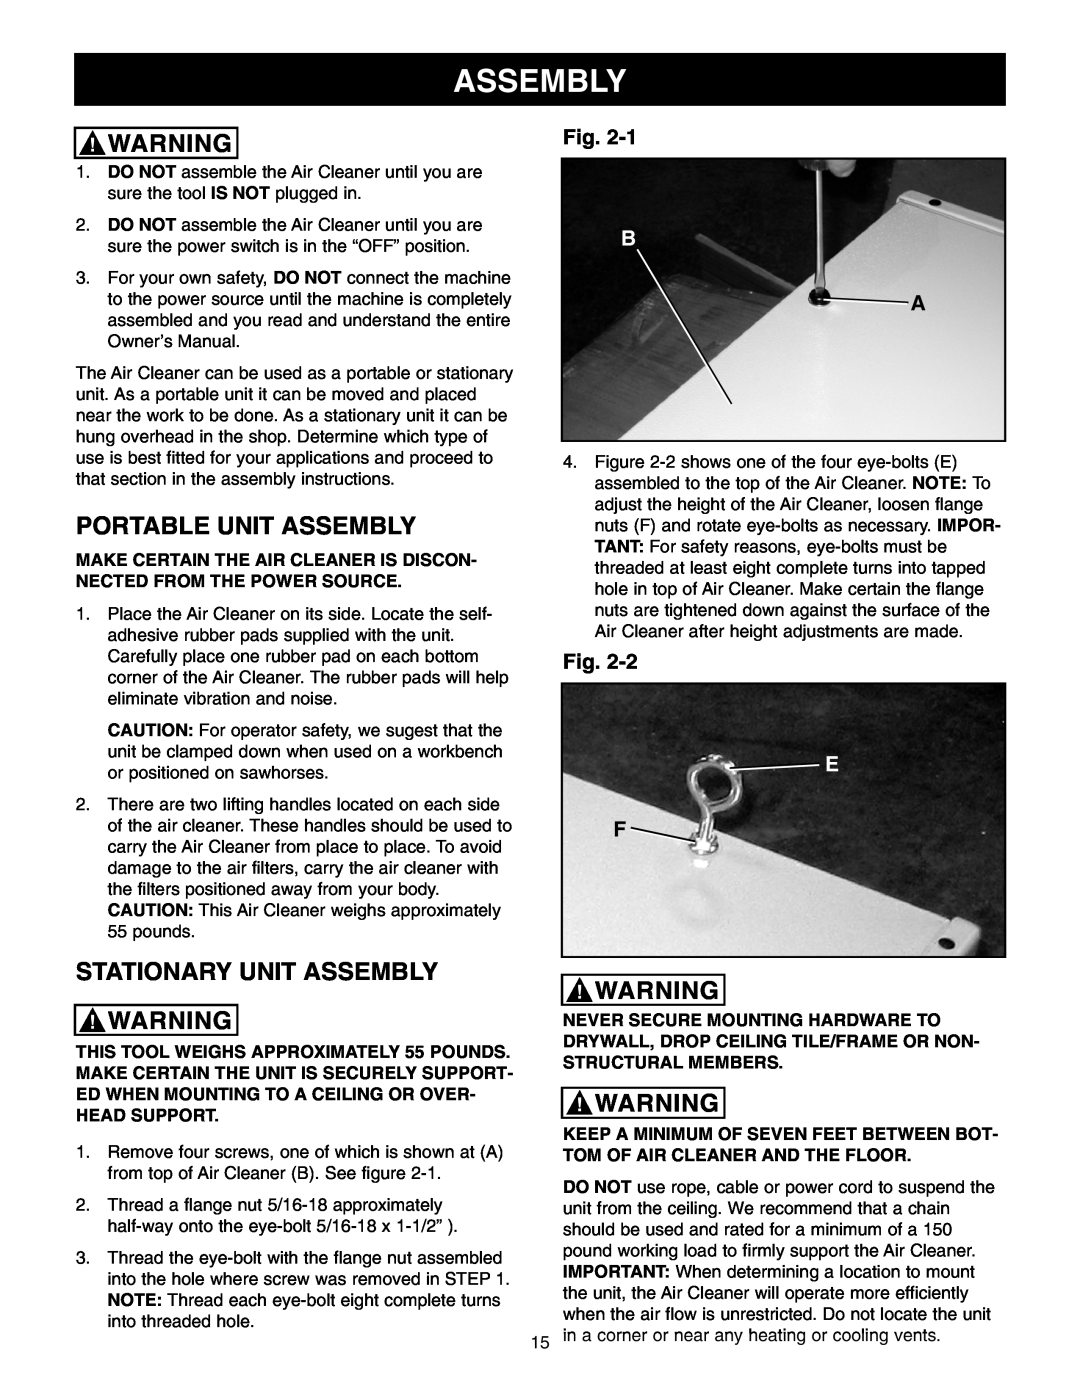 Craftsman 65100 user manual Portable Unit Assembly, Stationary Unit Assembly 